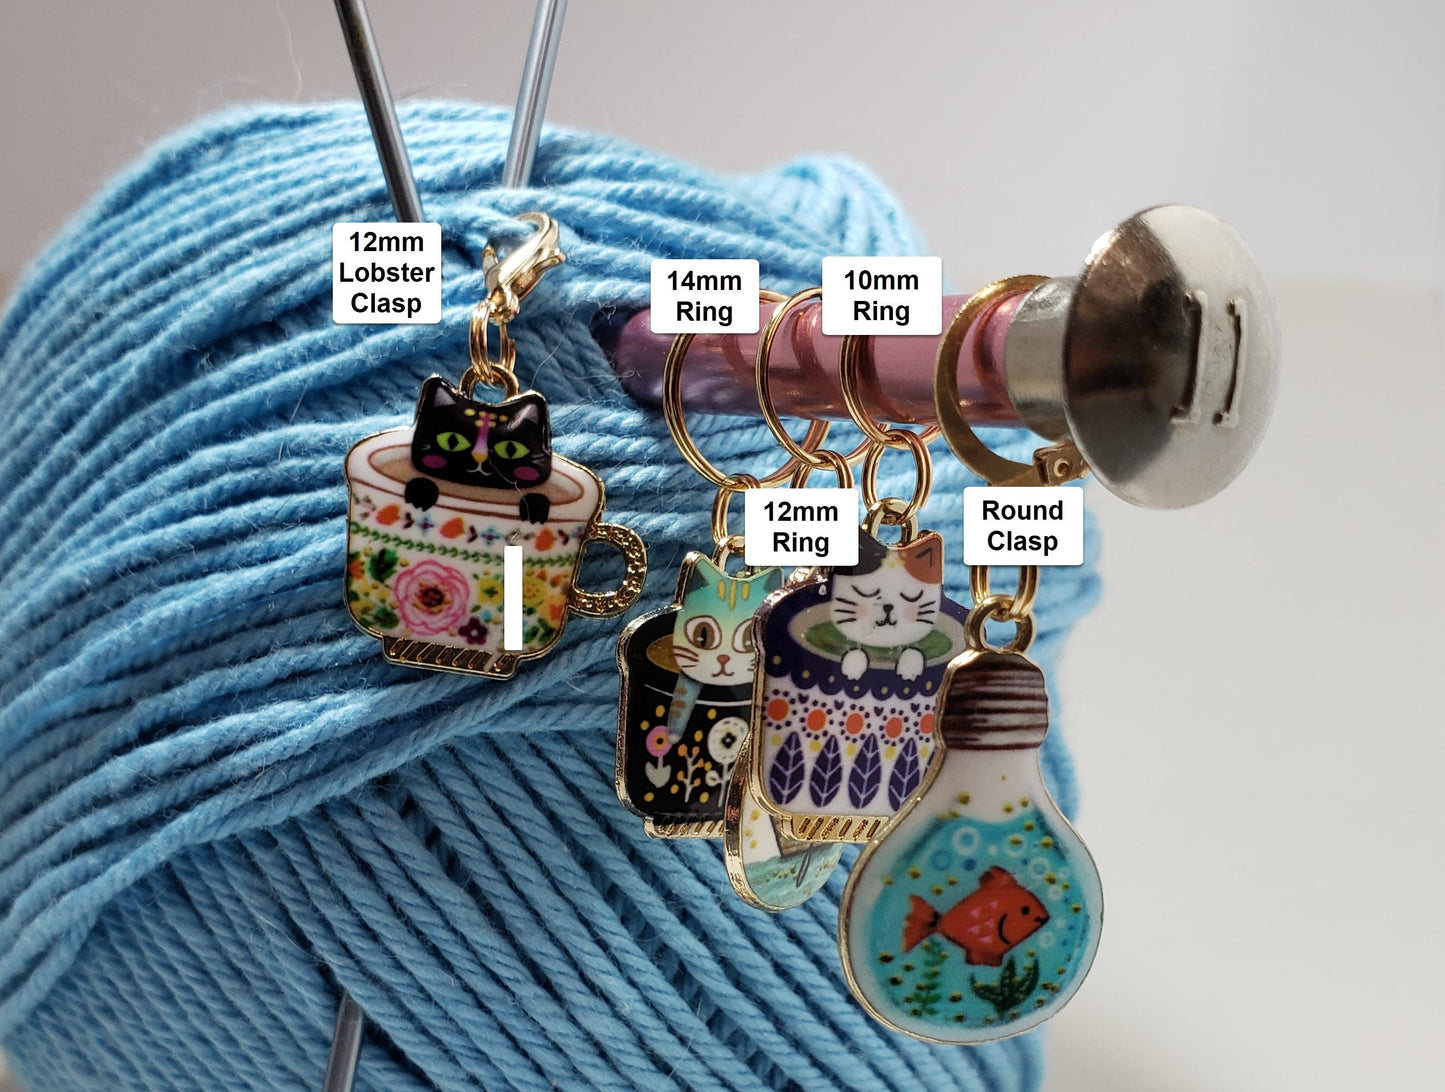 Jellyfish Stitch Markers for Knitting, 4pc | Crochet stitch marker, progress keeper, project bag charms, crochet accessory